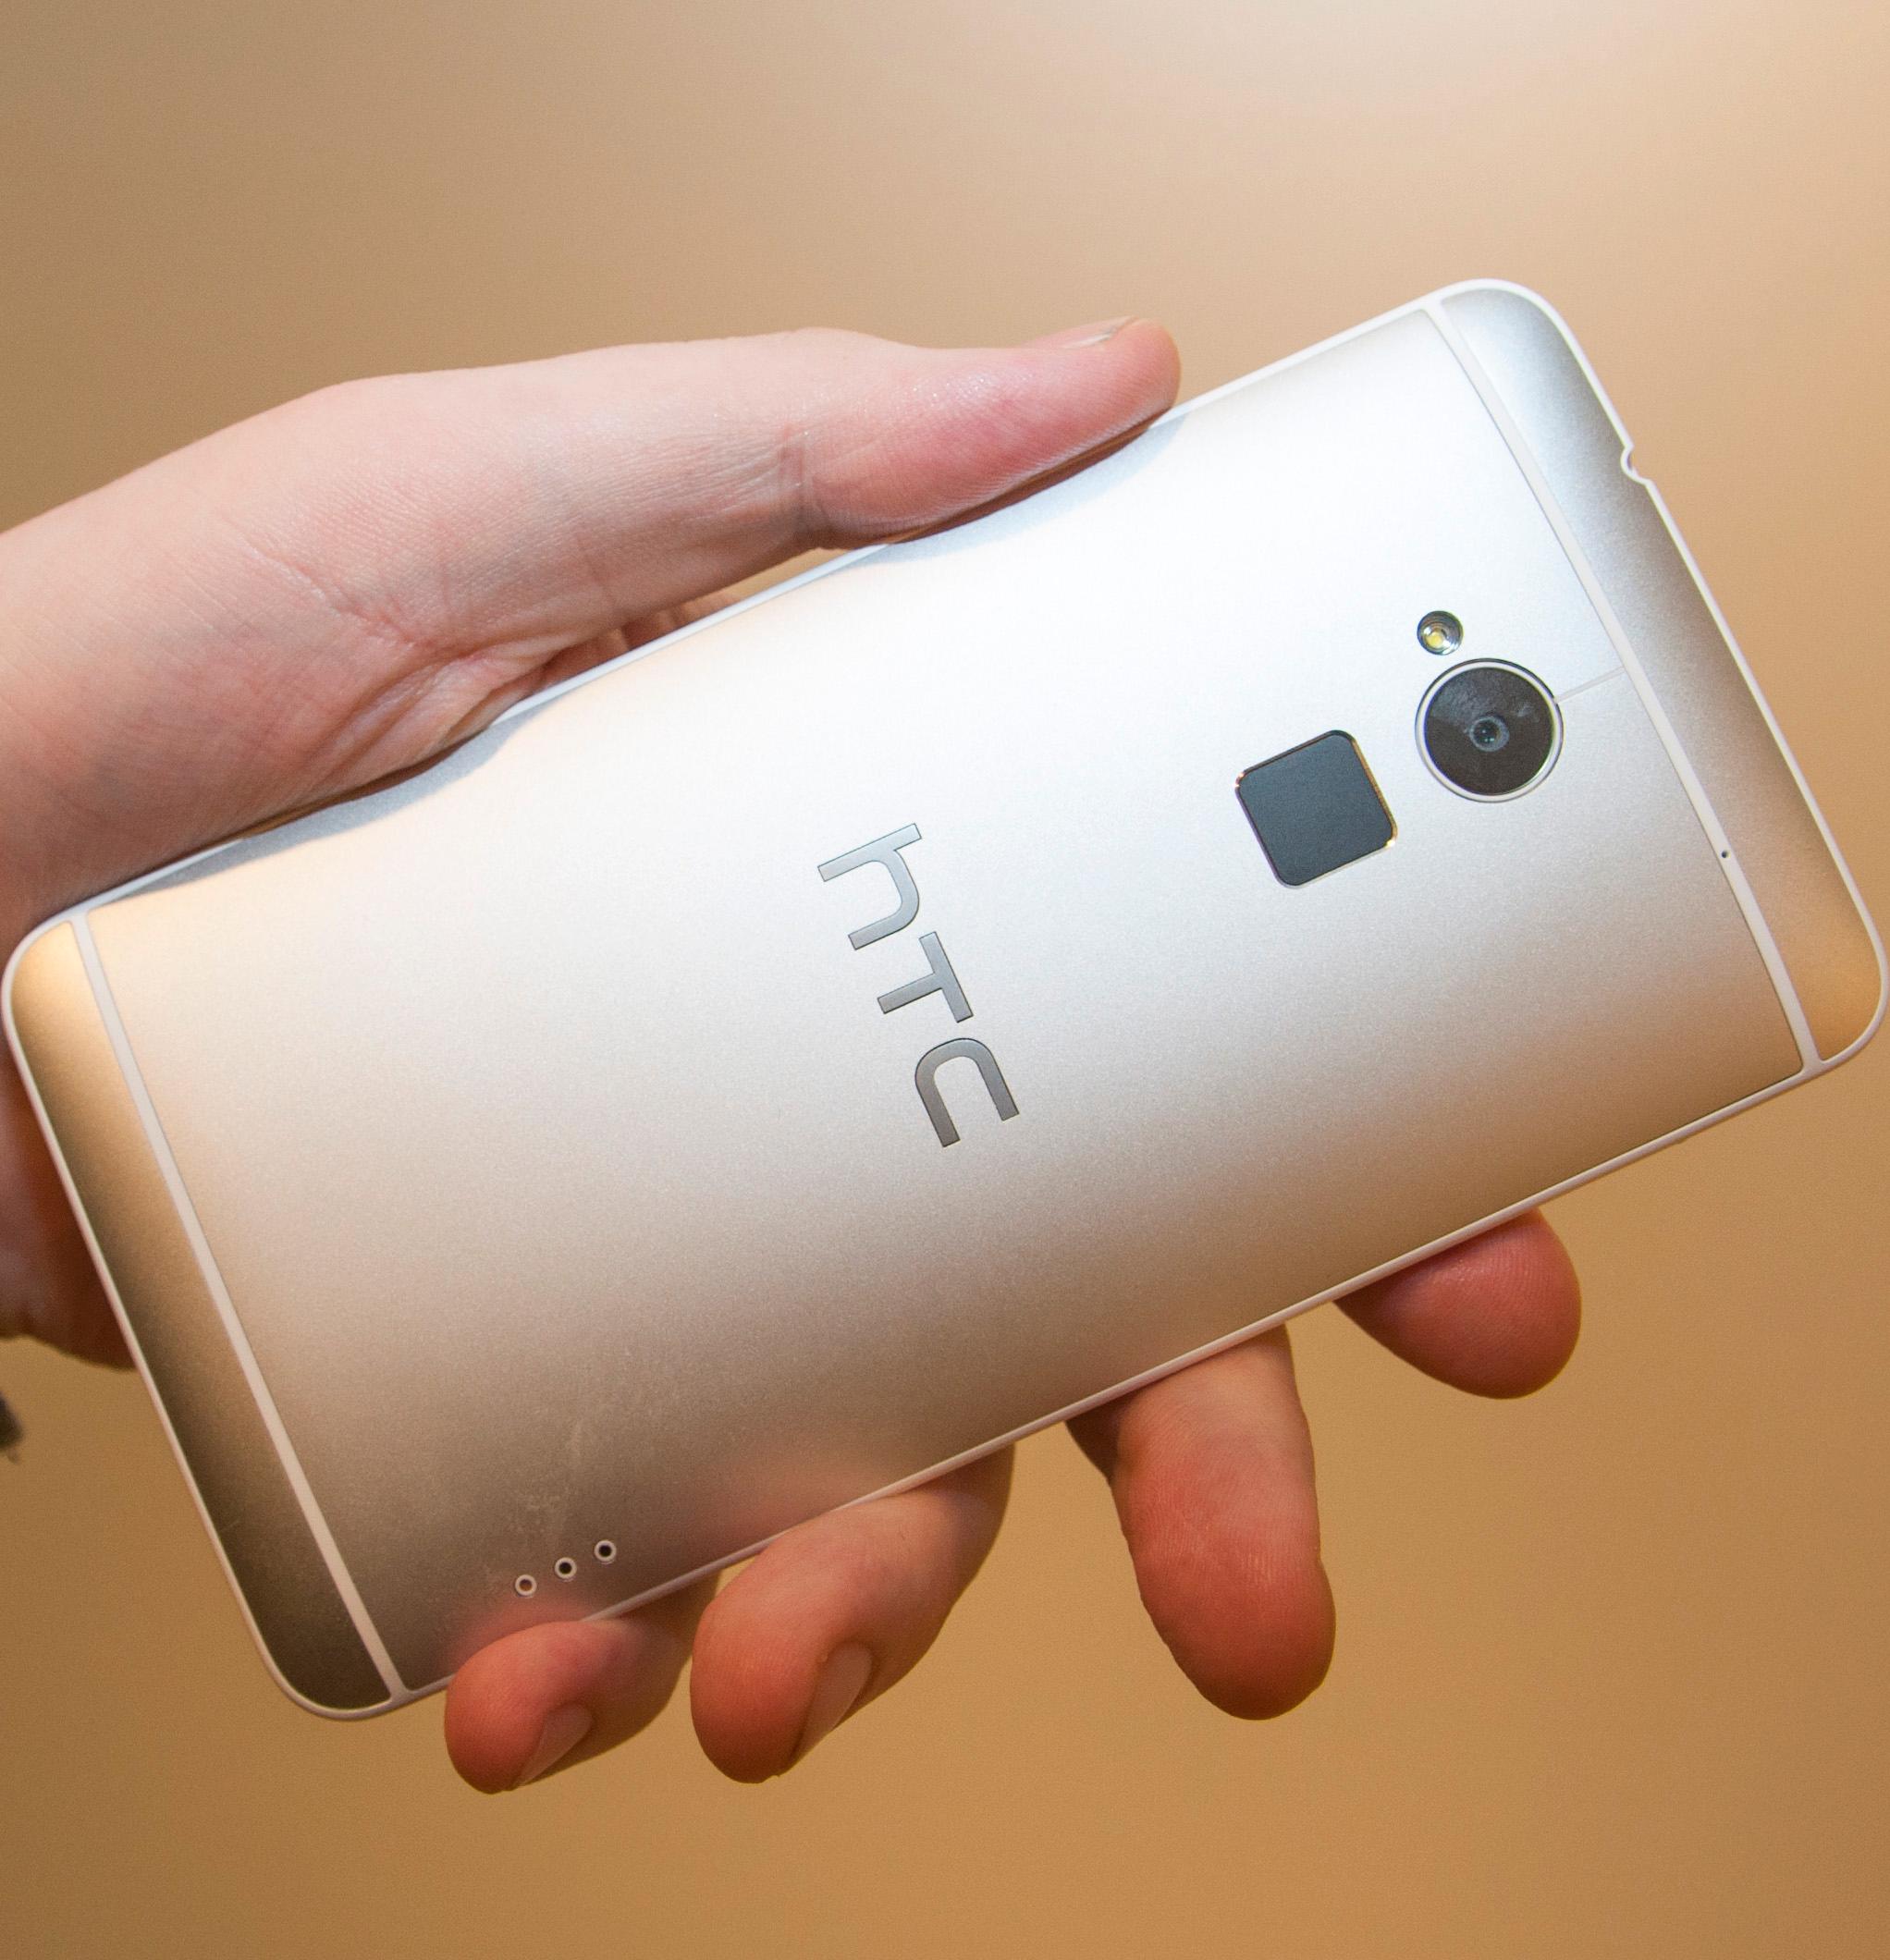 Slik ser baksiden på HTC One Max ut.Foto: Finn Jarle Kvalheim, Amobil.no